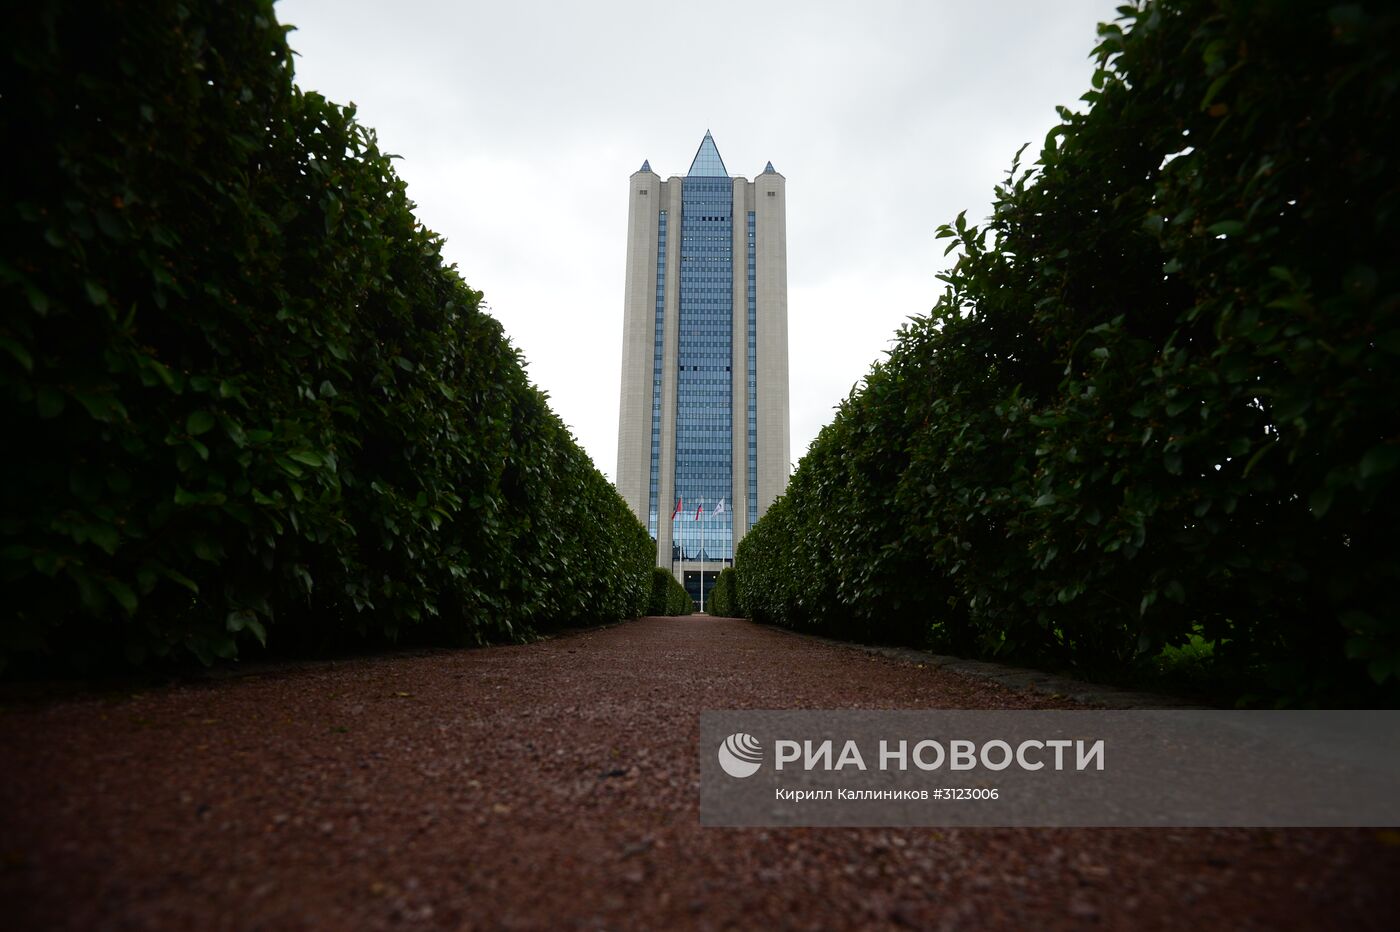 Офис ОАО "Газпром" в Москве